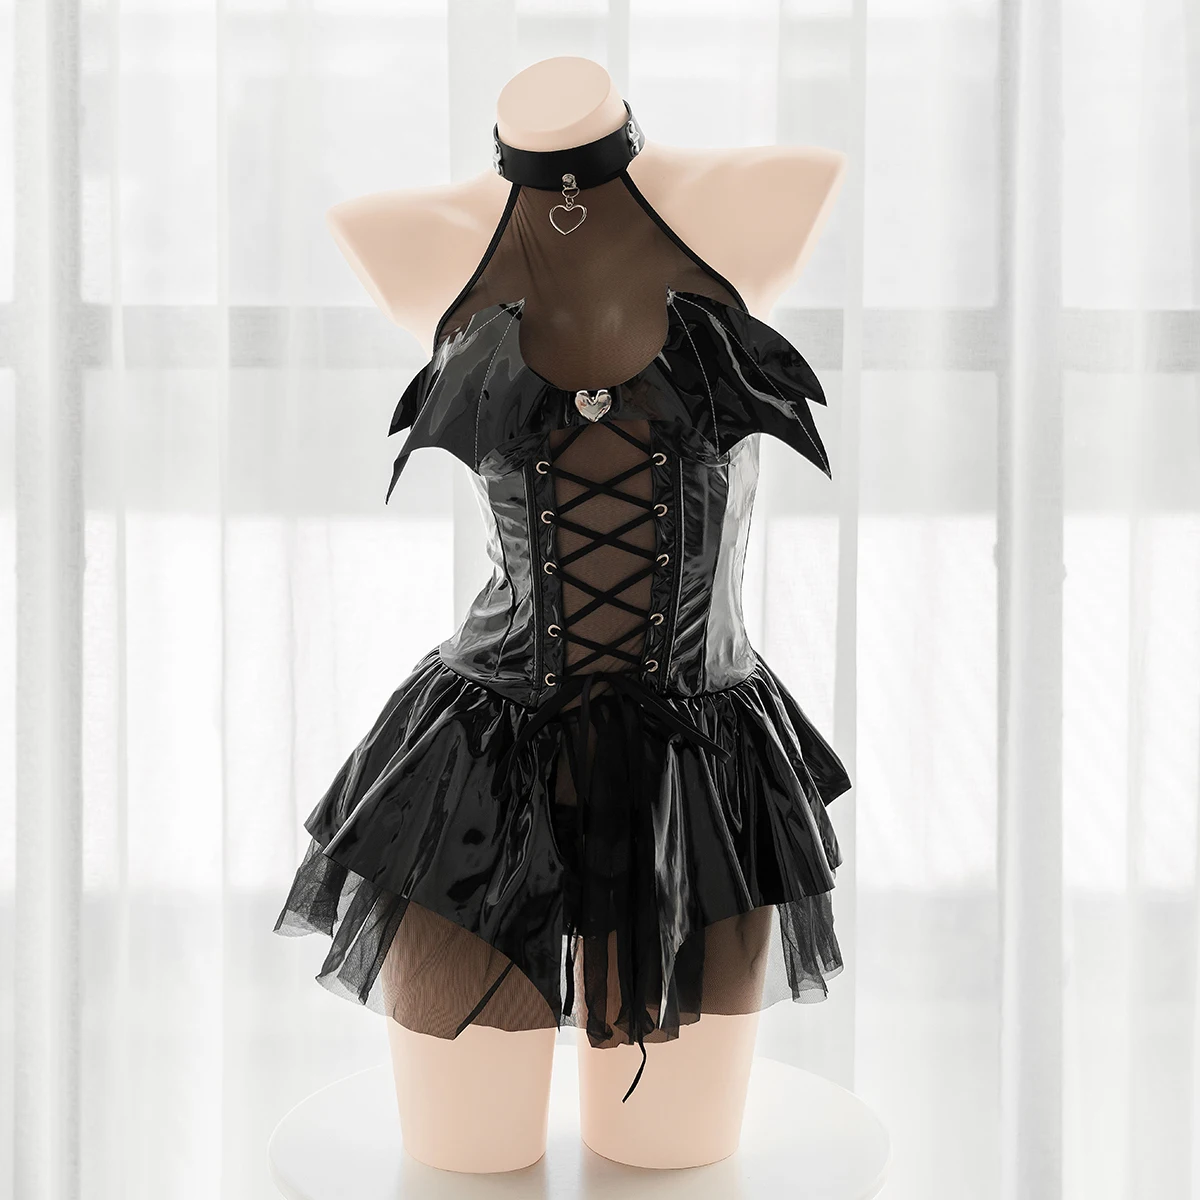 

Japanese Anime Devil Girl Lolita Sexy Cosplay Dress Patent Leather Halter Mesh Perspective Dress Women Home Wear Black Sleepwear